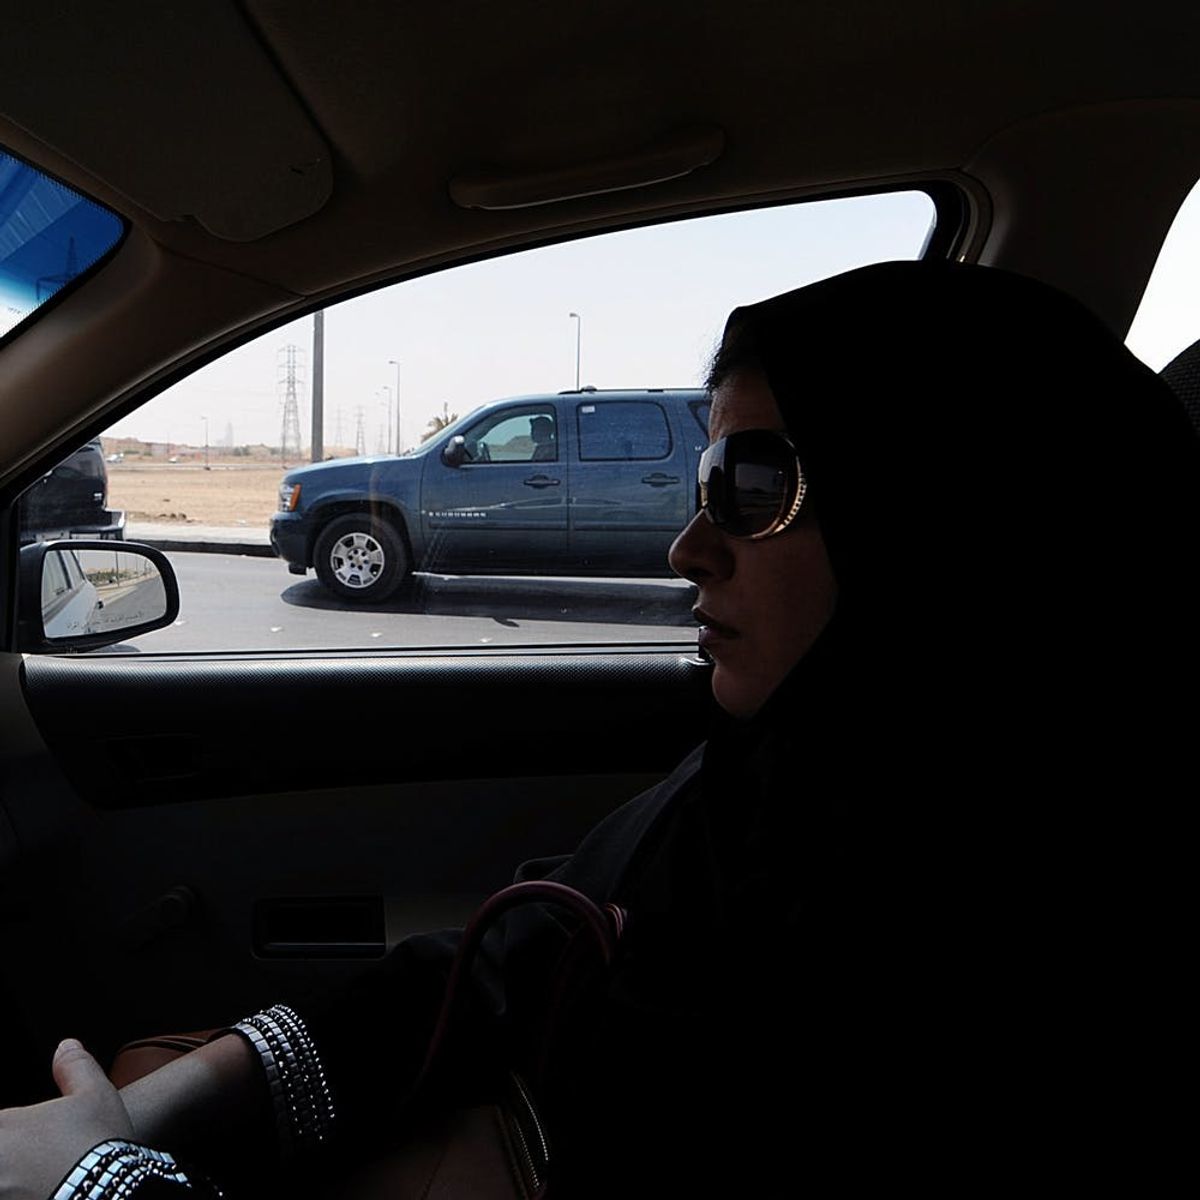 Saudi Arabia to Lift Ban That Prohibits Women from Driving